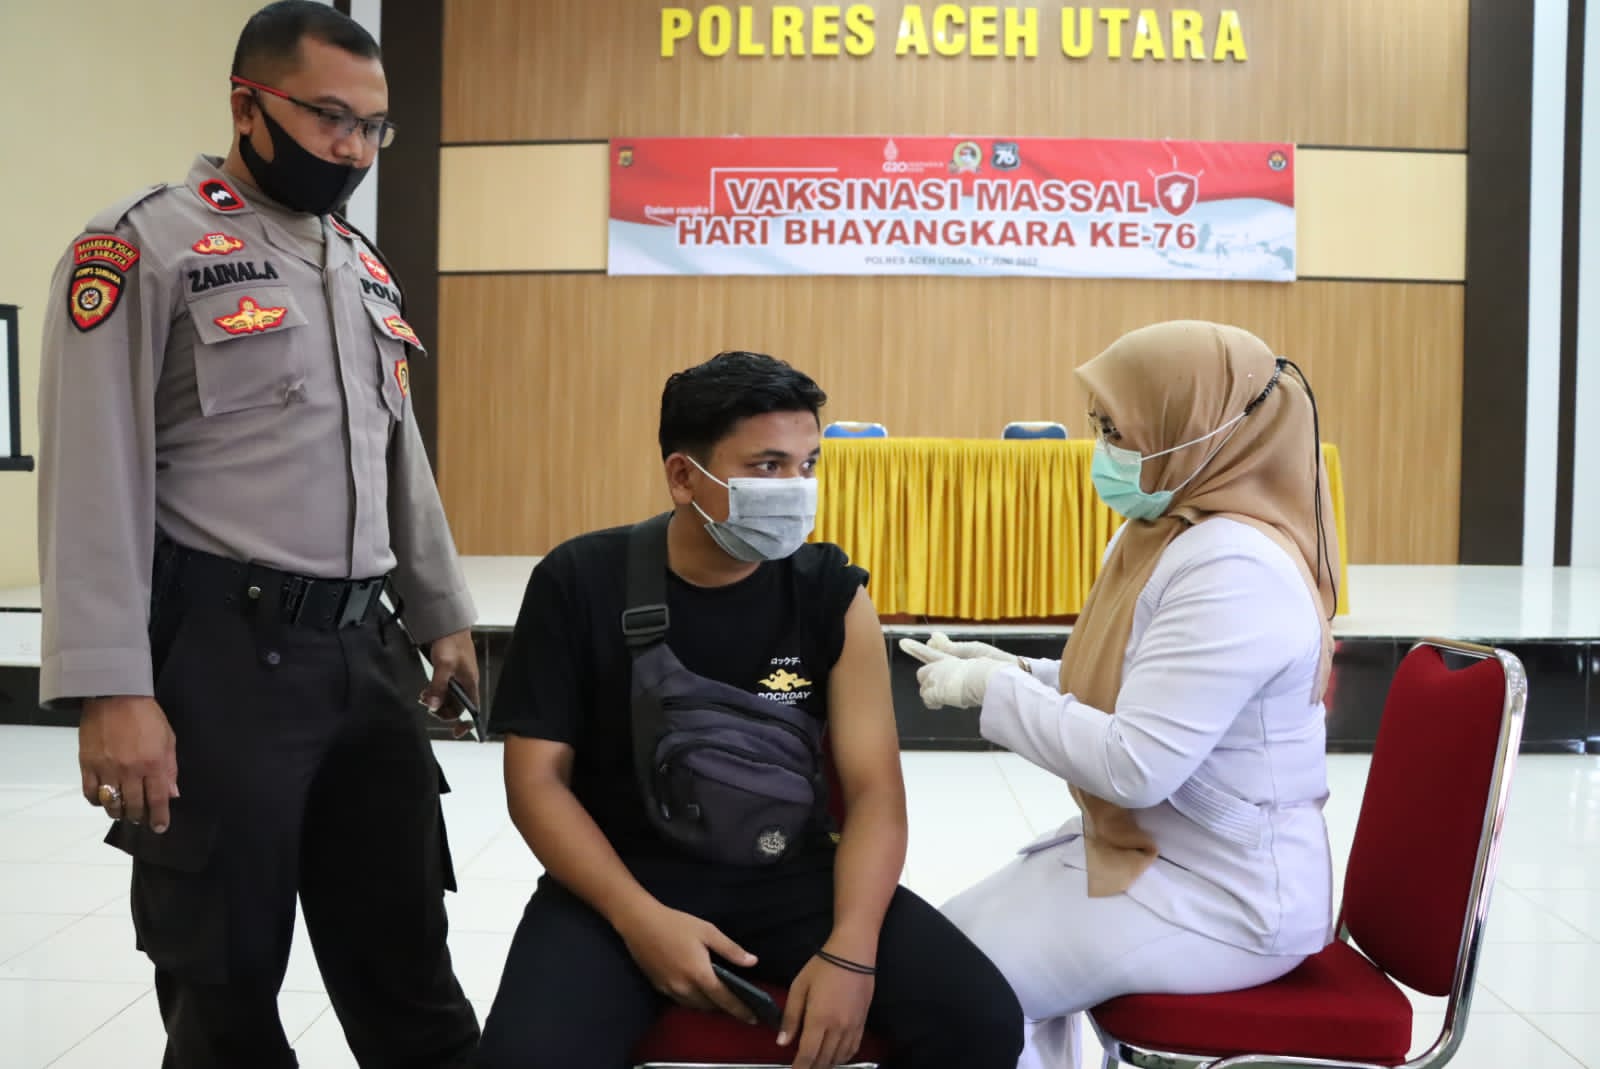 Jelang Hari Bhayangkara Ke-76, Polres Aceh Utara Gelar Vaksinasi Massal